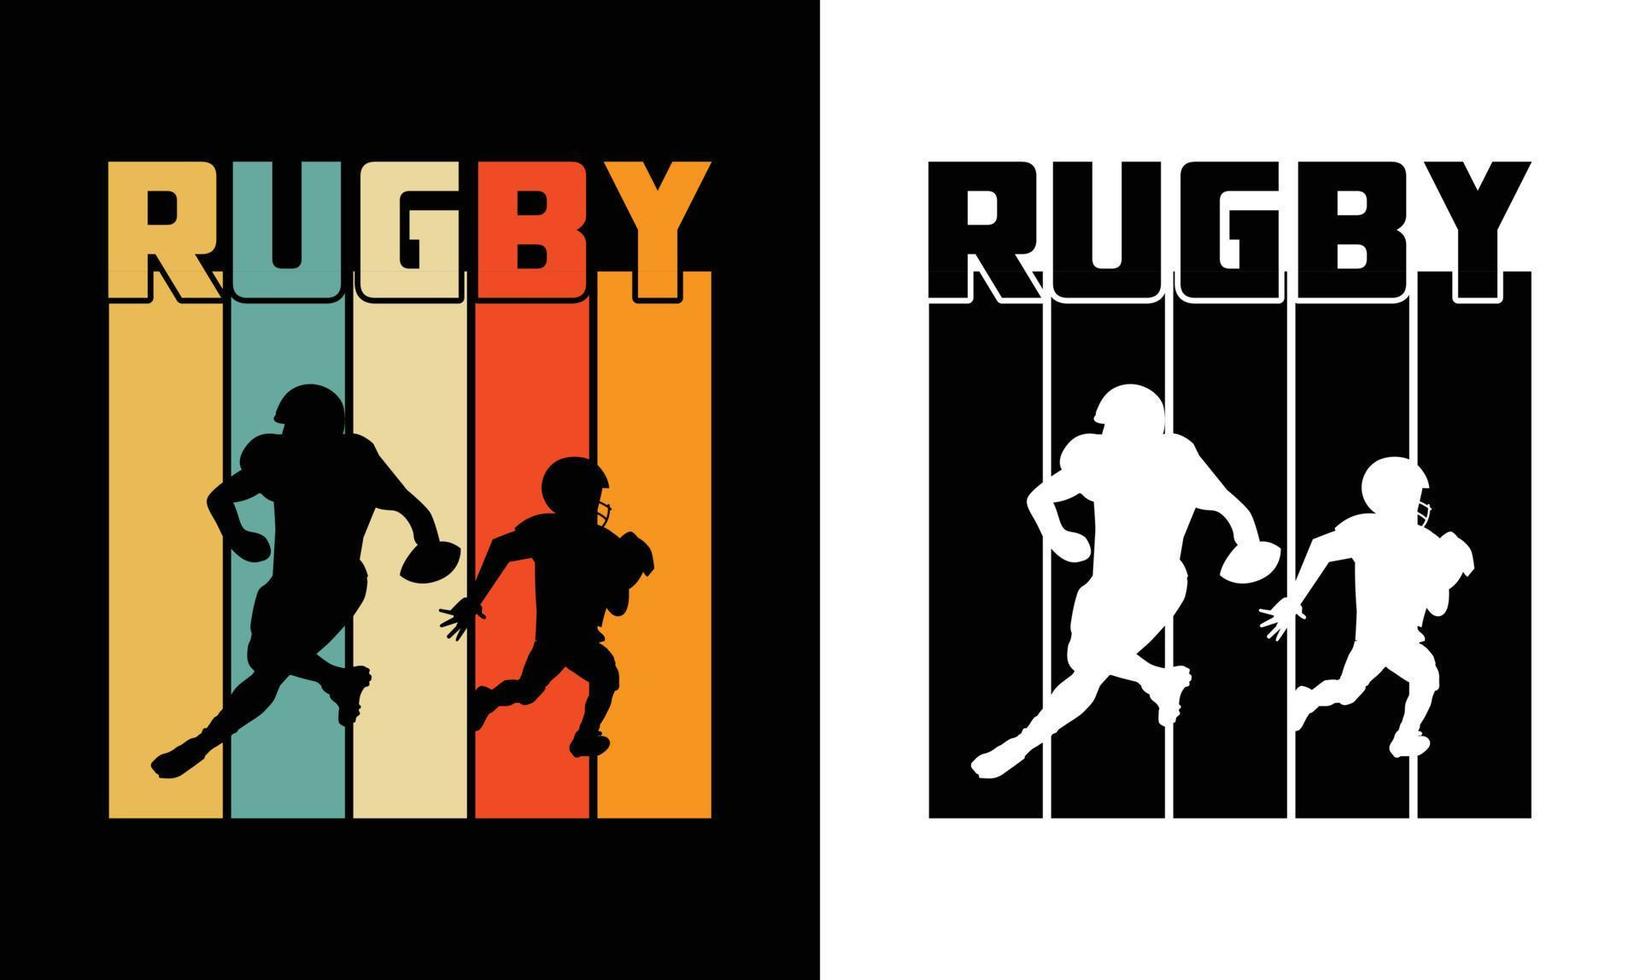 American-Football-T-Shirt-Design, Rugby-T-Shirt-Design vektor